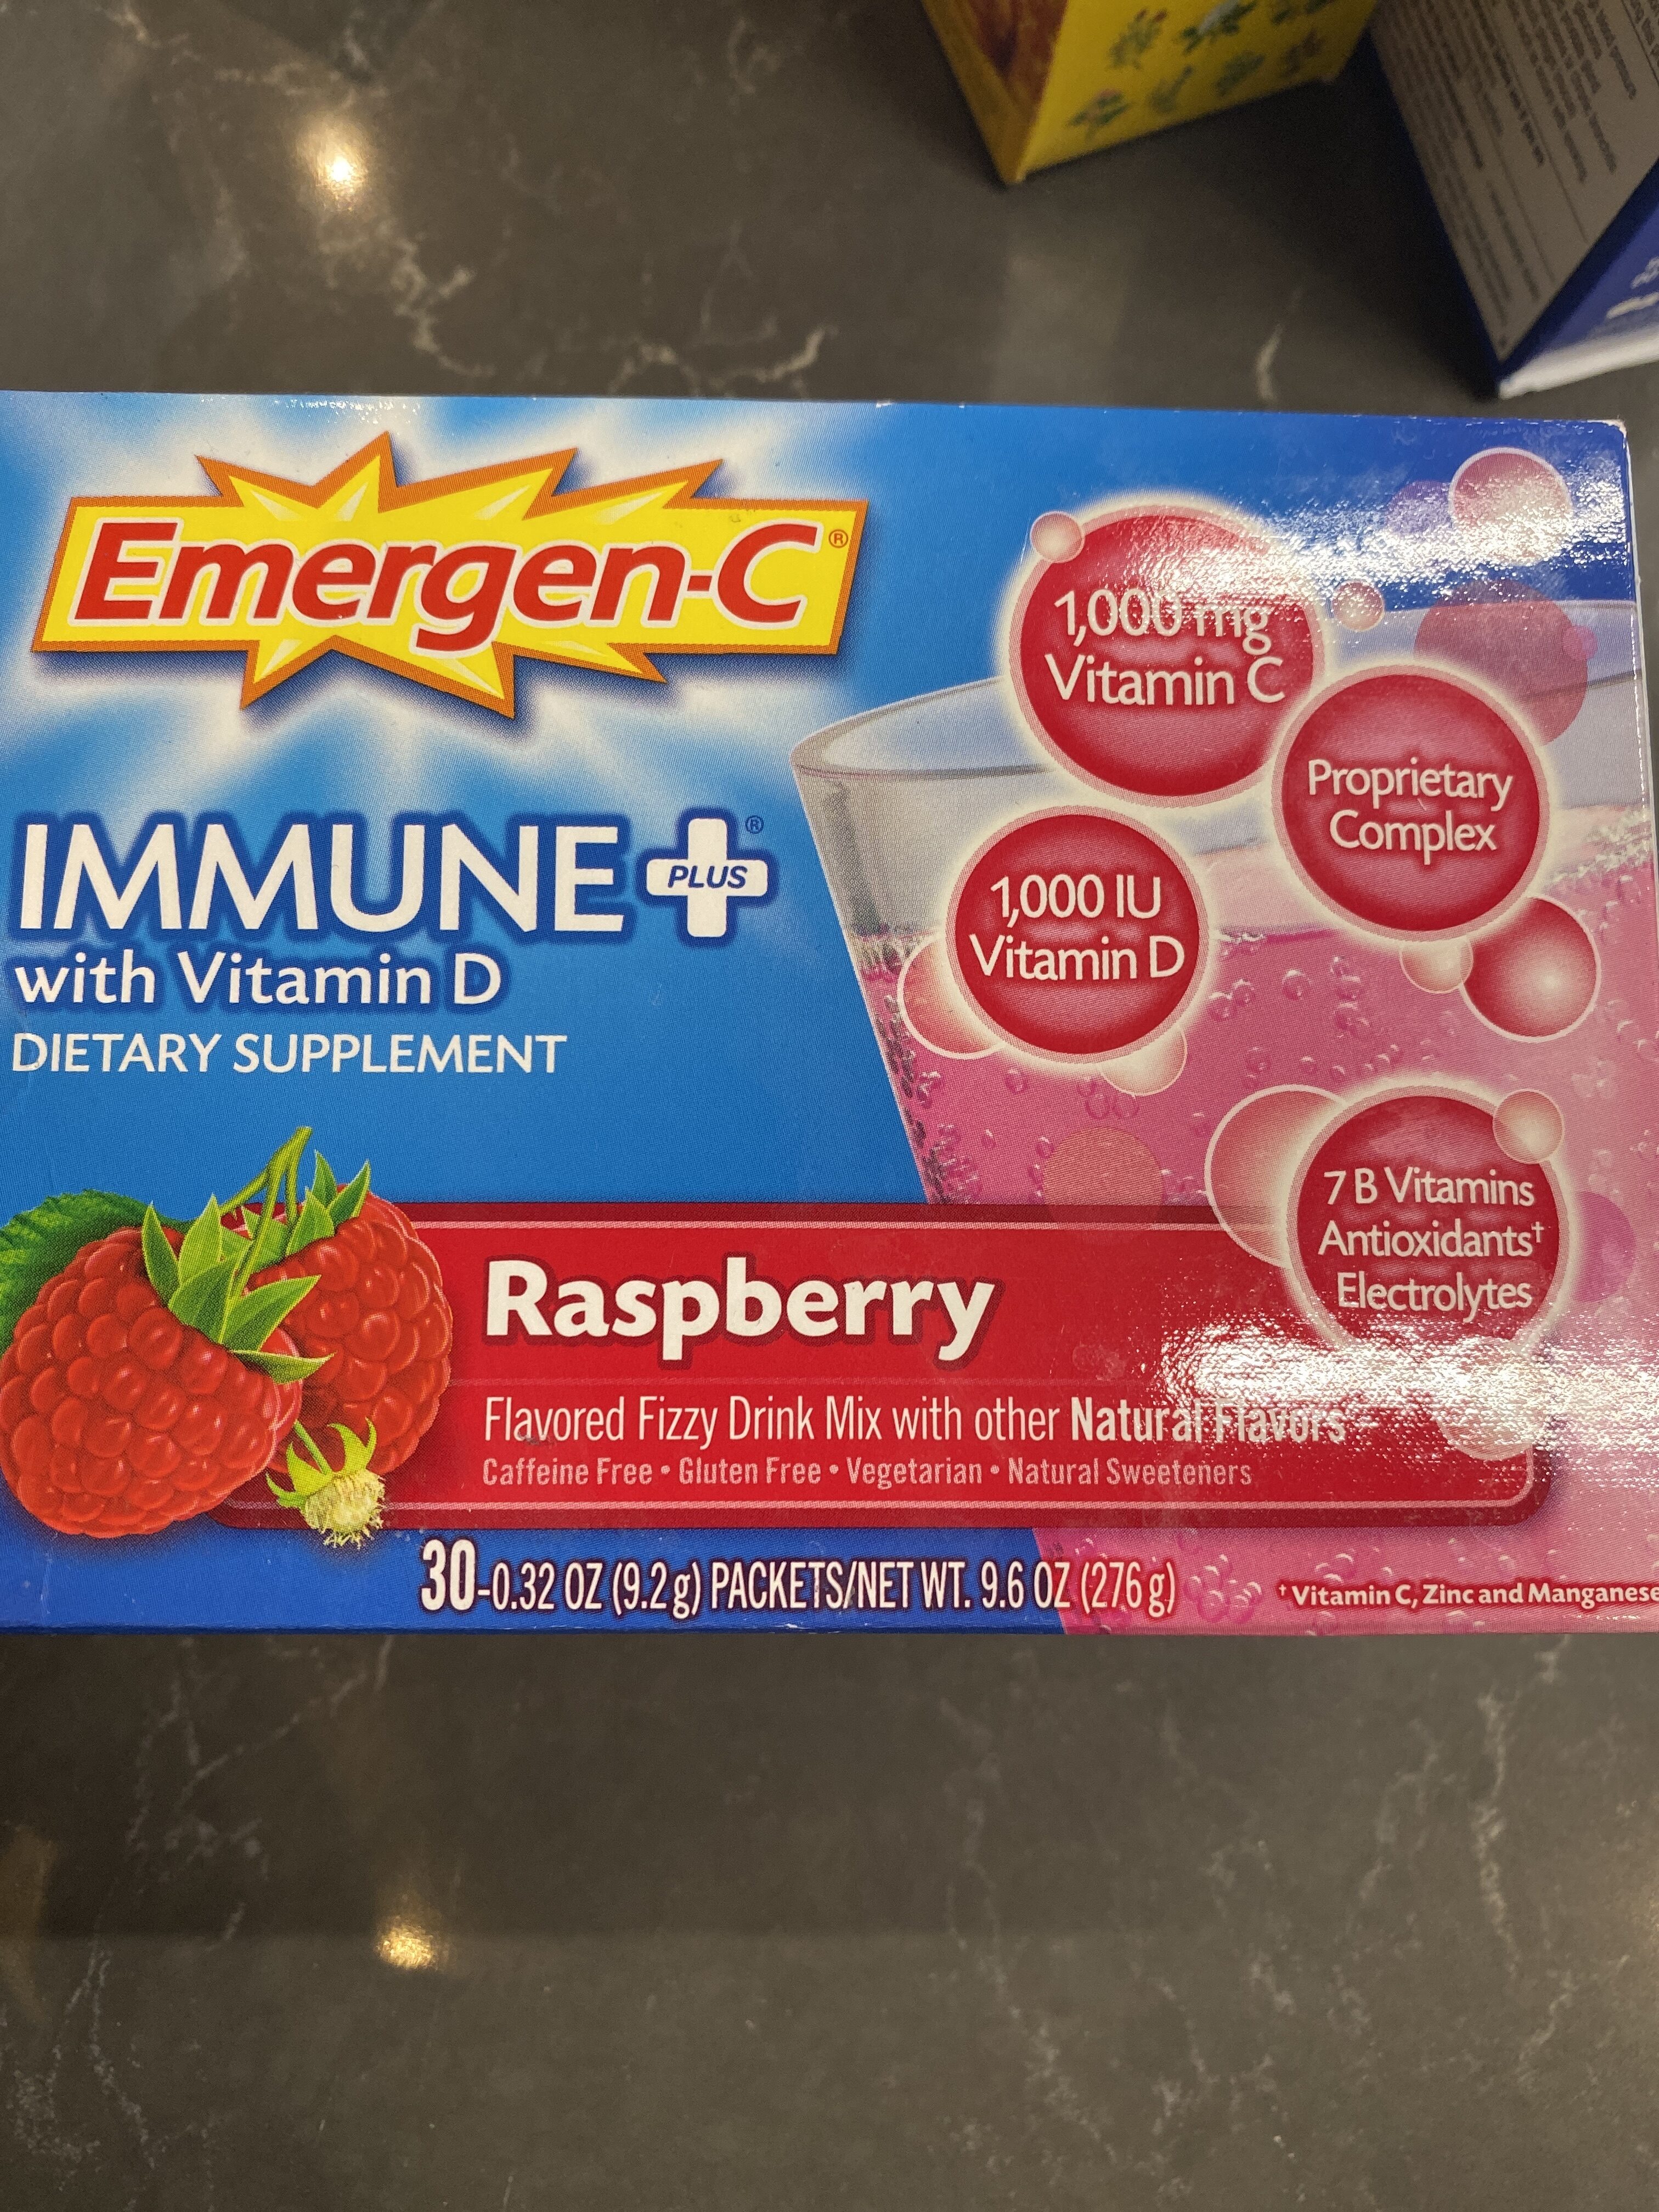 Alacer emer'gen-c immune + raspberry - Product